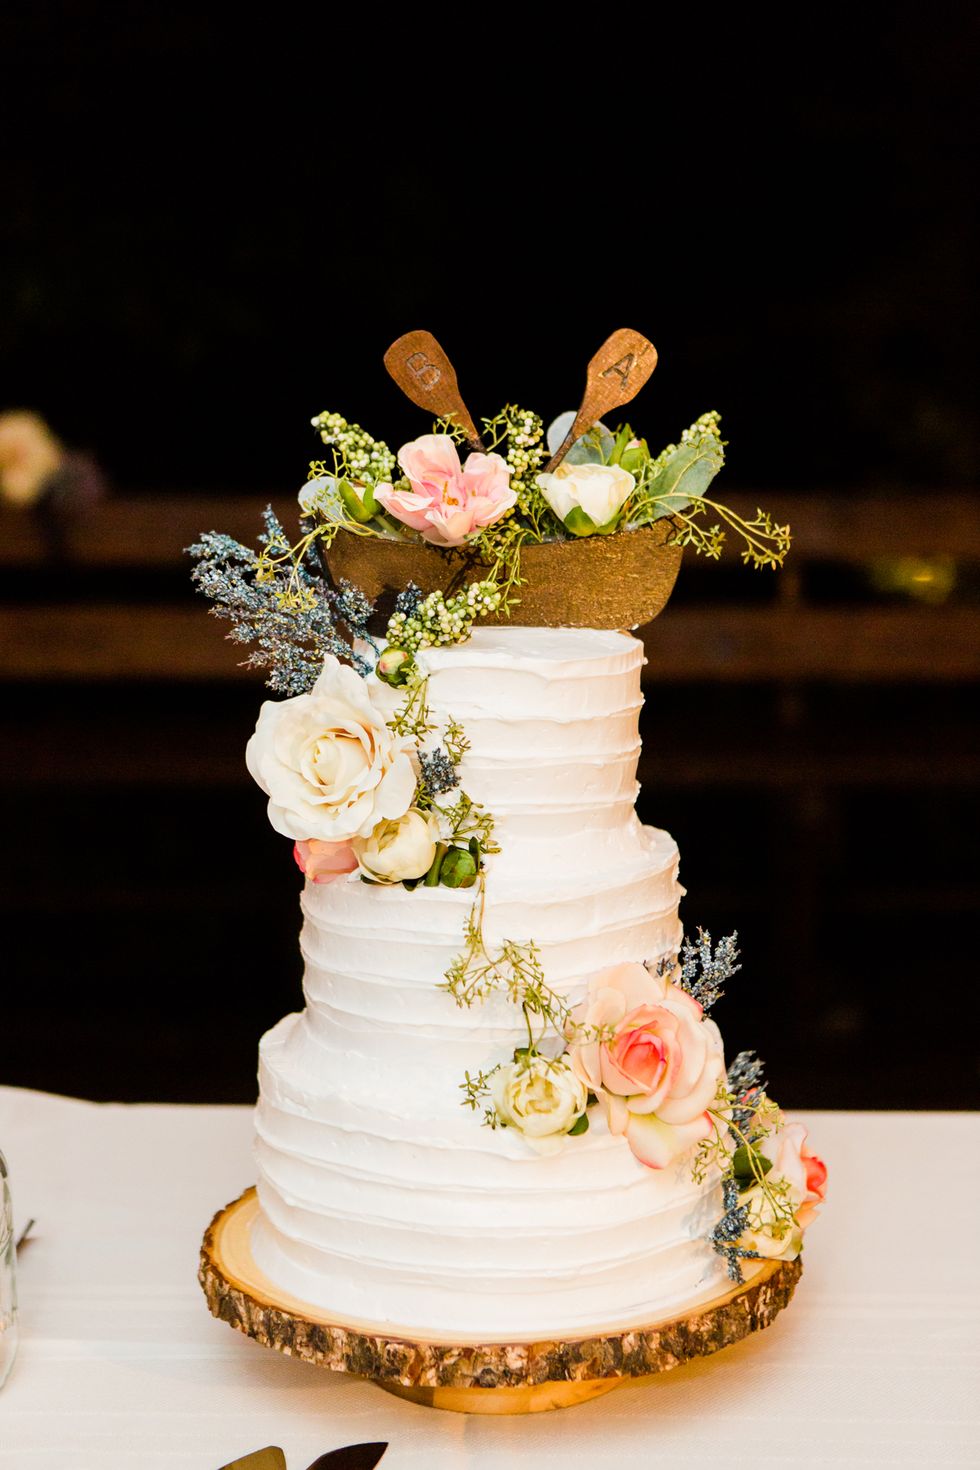 25 Best Homemade Wedding Cake Recipes